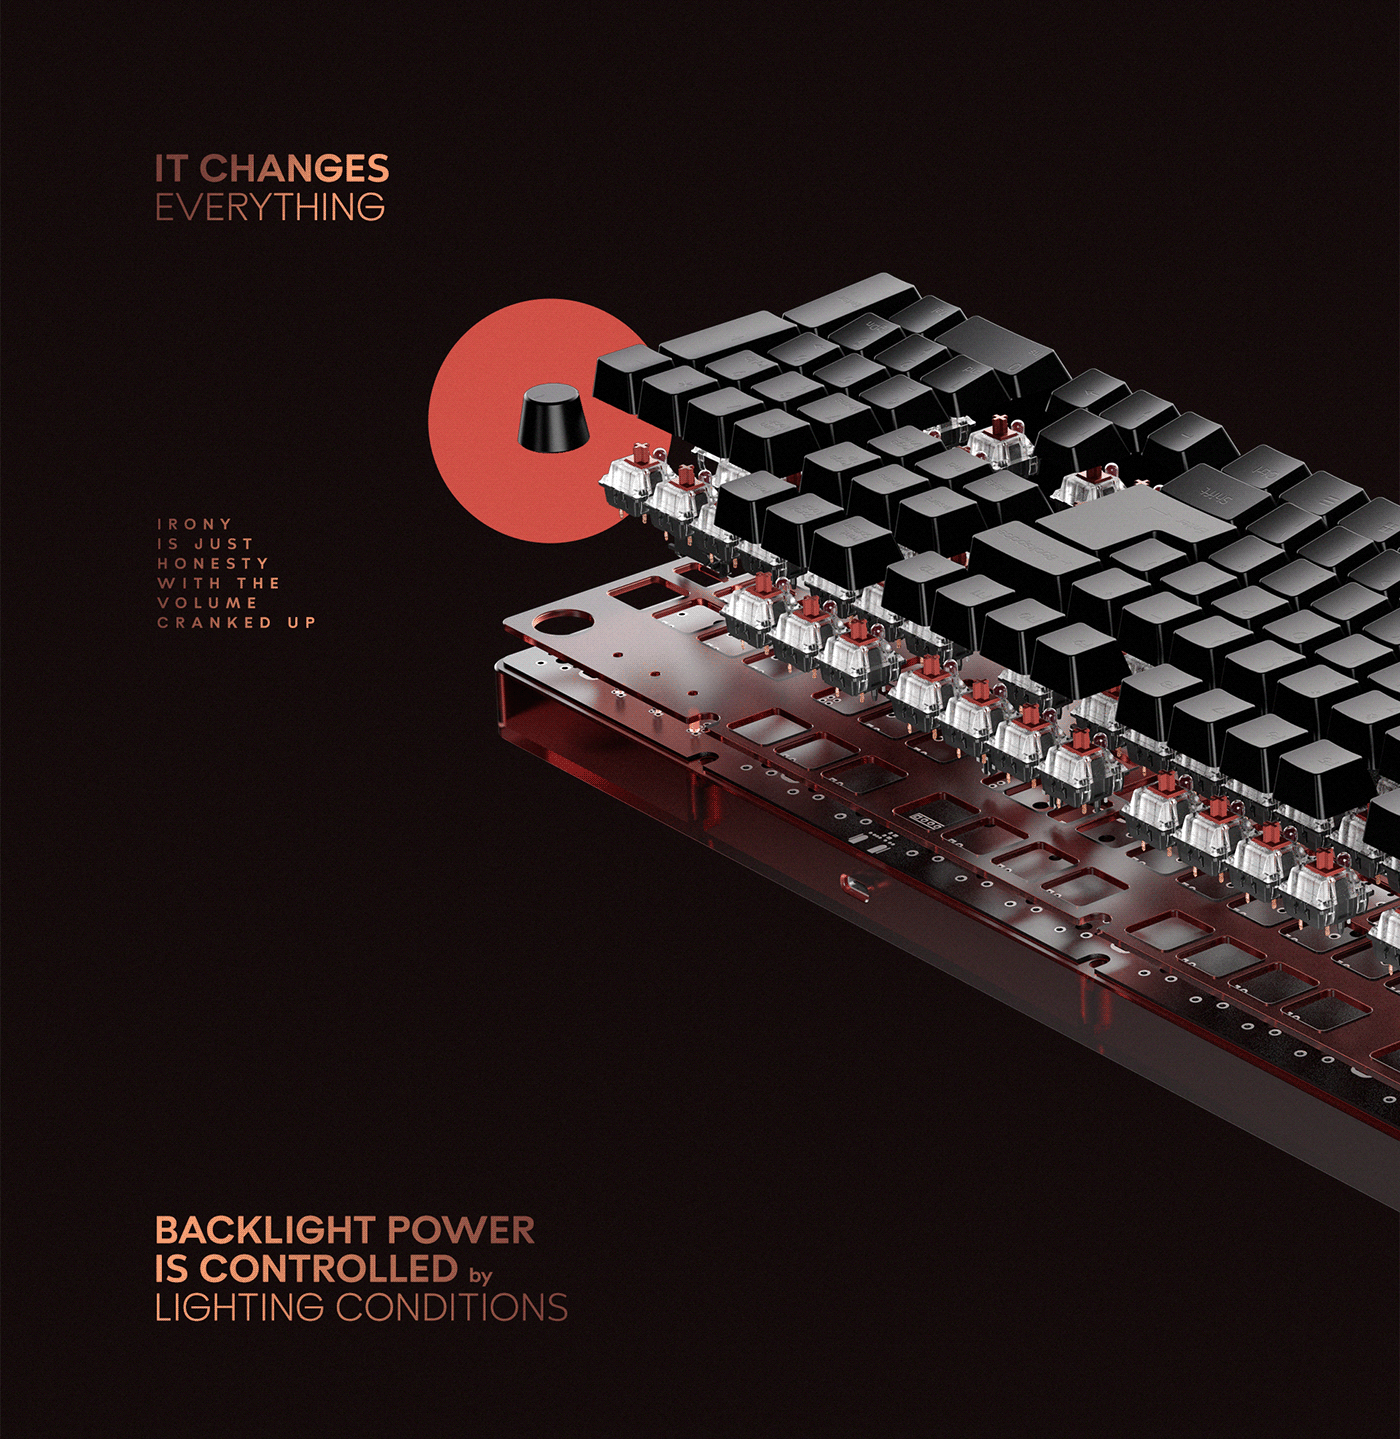 keyboard concept samurai kusunoki pcb Custom keycaps industrialdesign acetate case